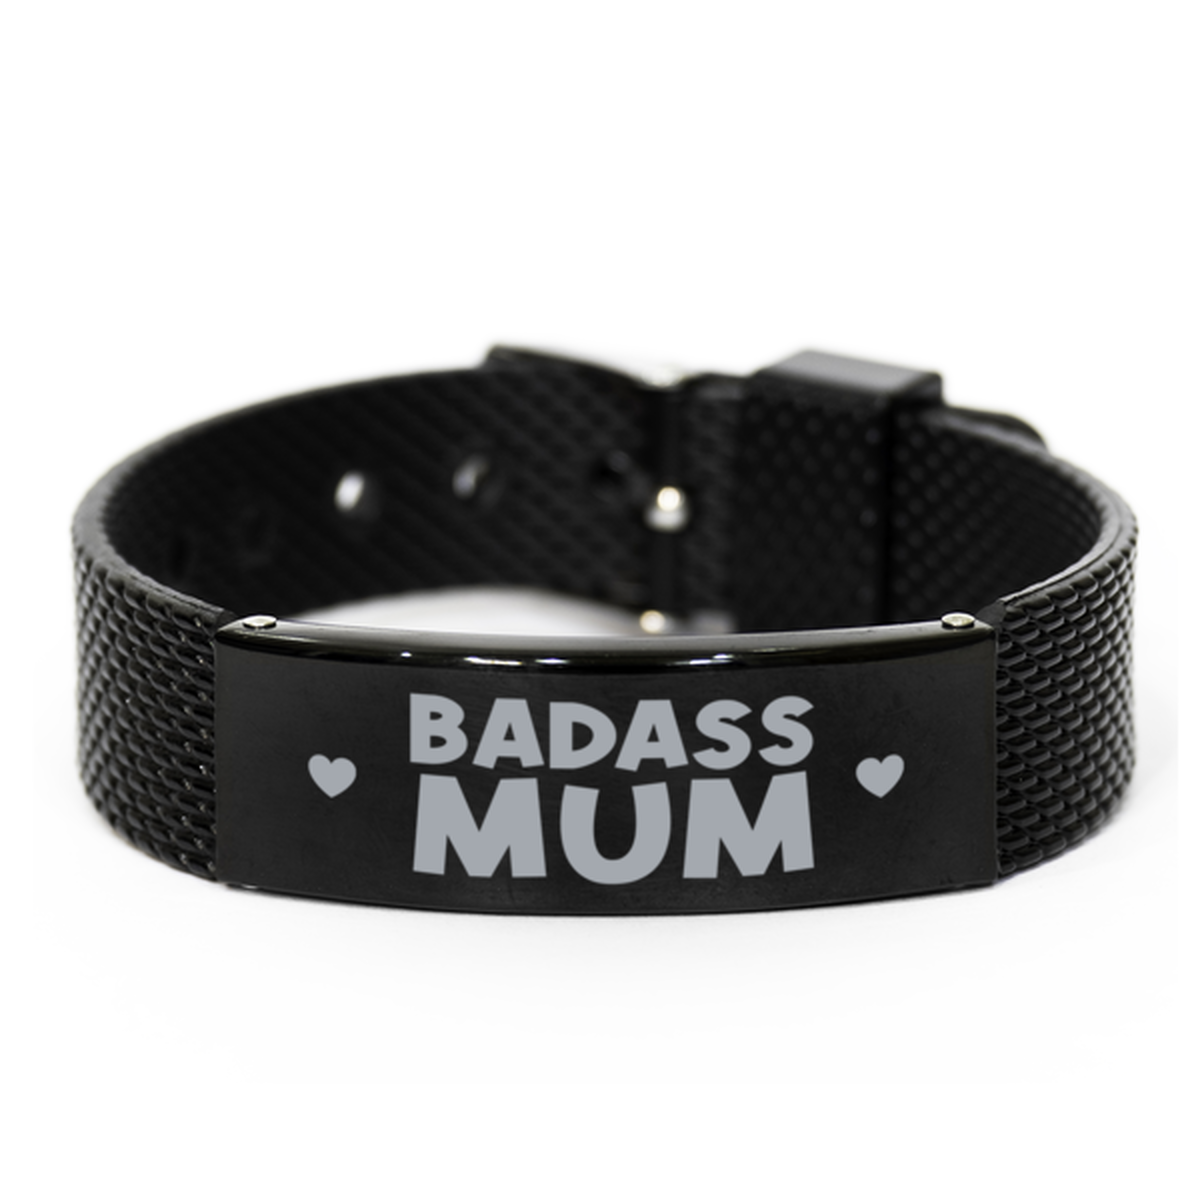 Mum Black Shark Mesh Bracelet, Badass Mum, Funny Family Gifts For Mum From Son Daughter